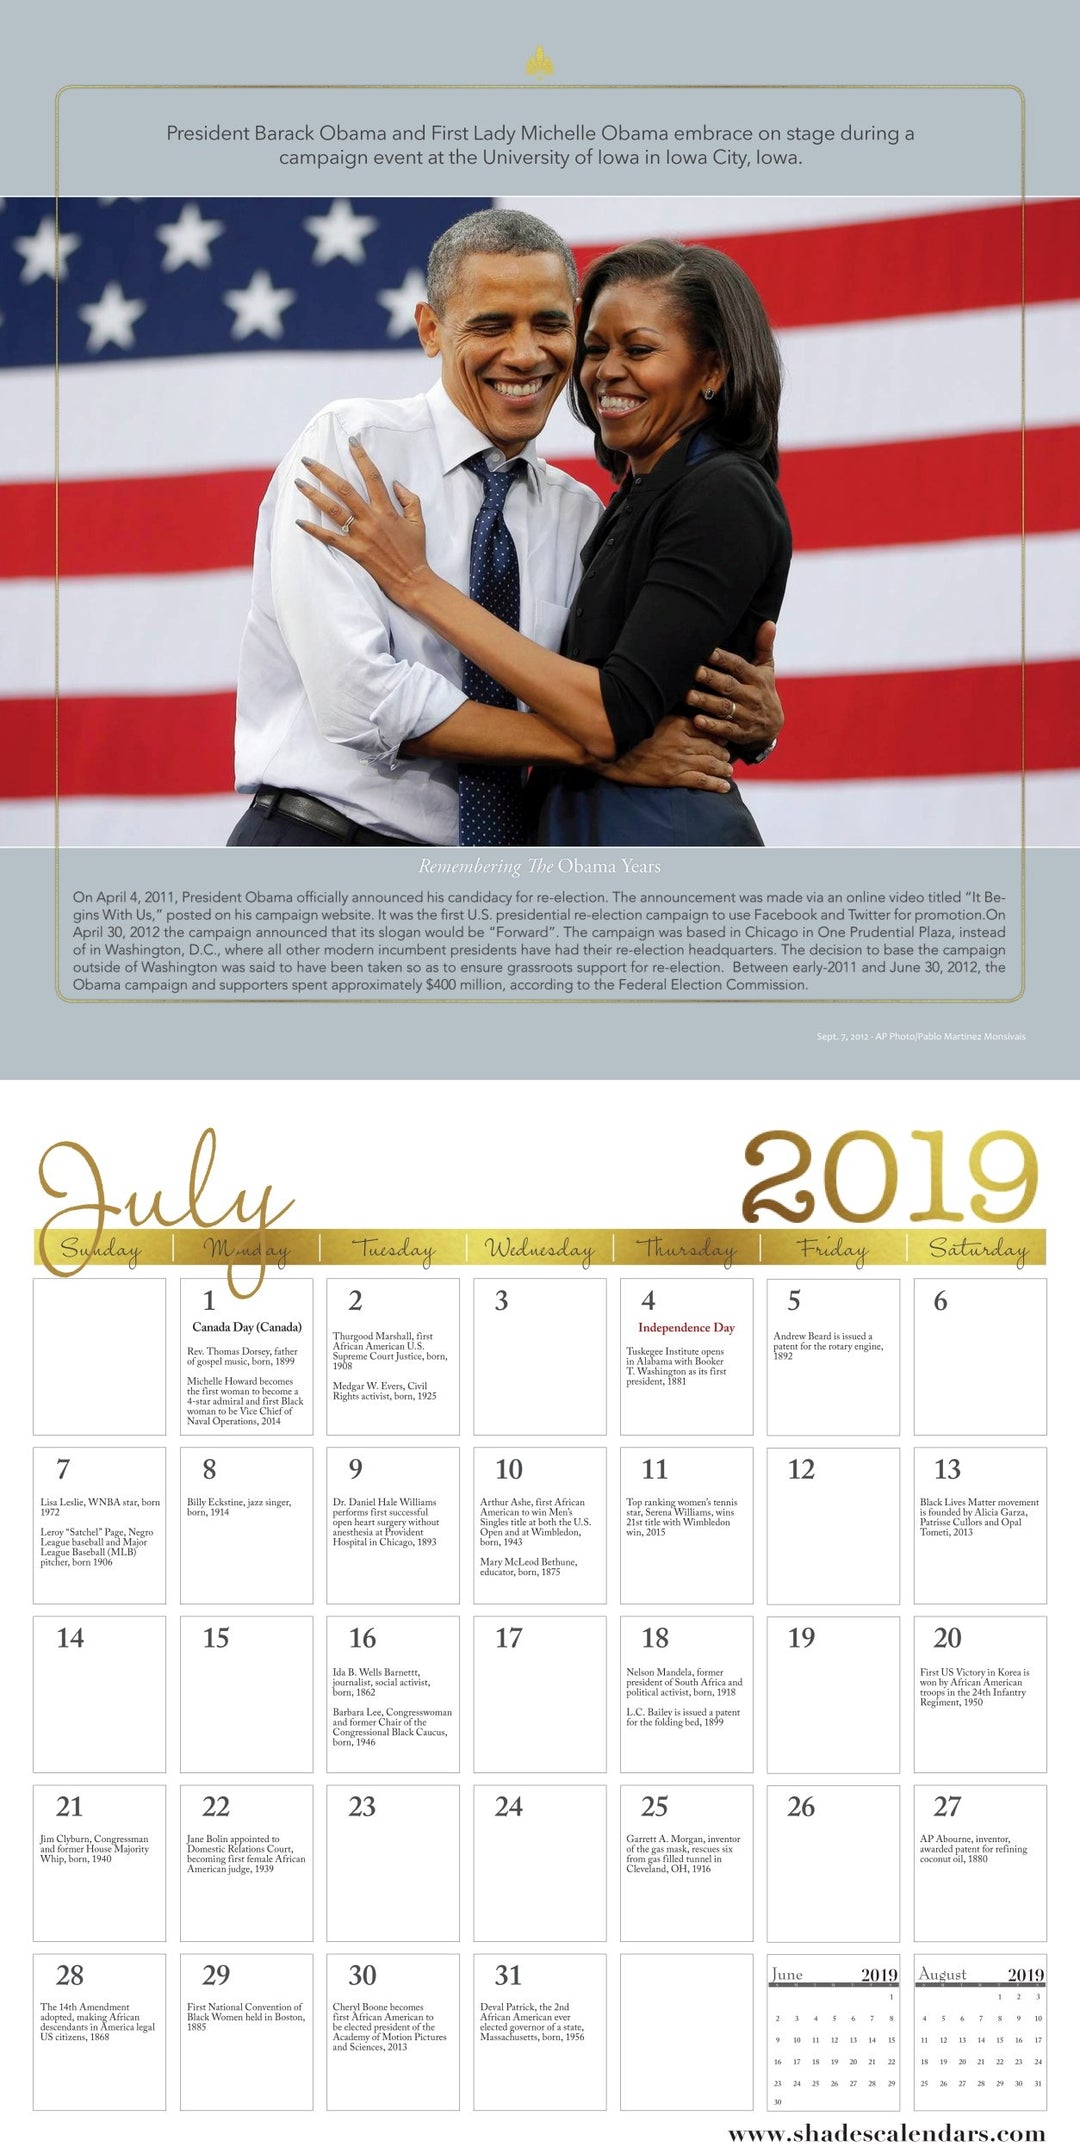 Remembering the Obama Years (2019 Black History Commemorative Calendar) (Interior)